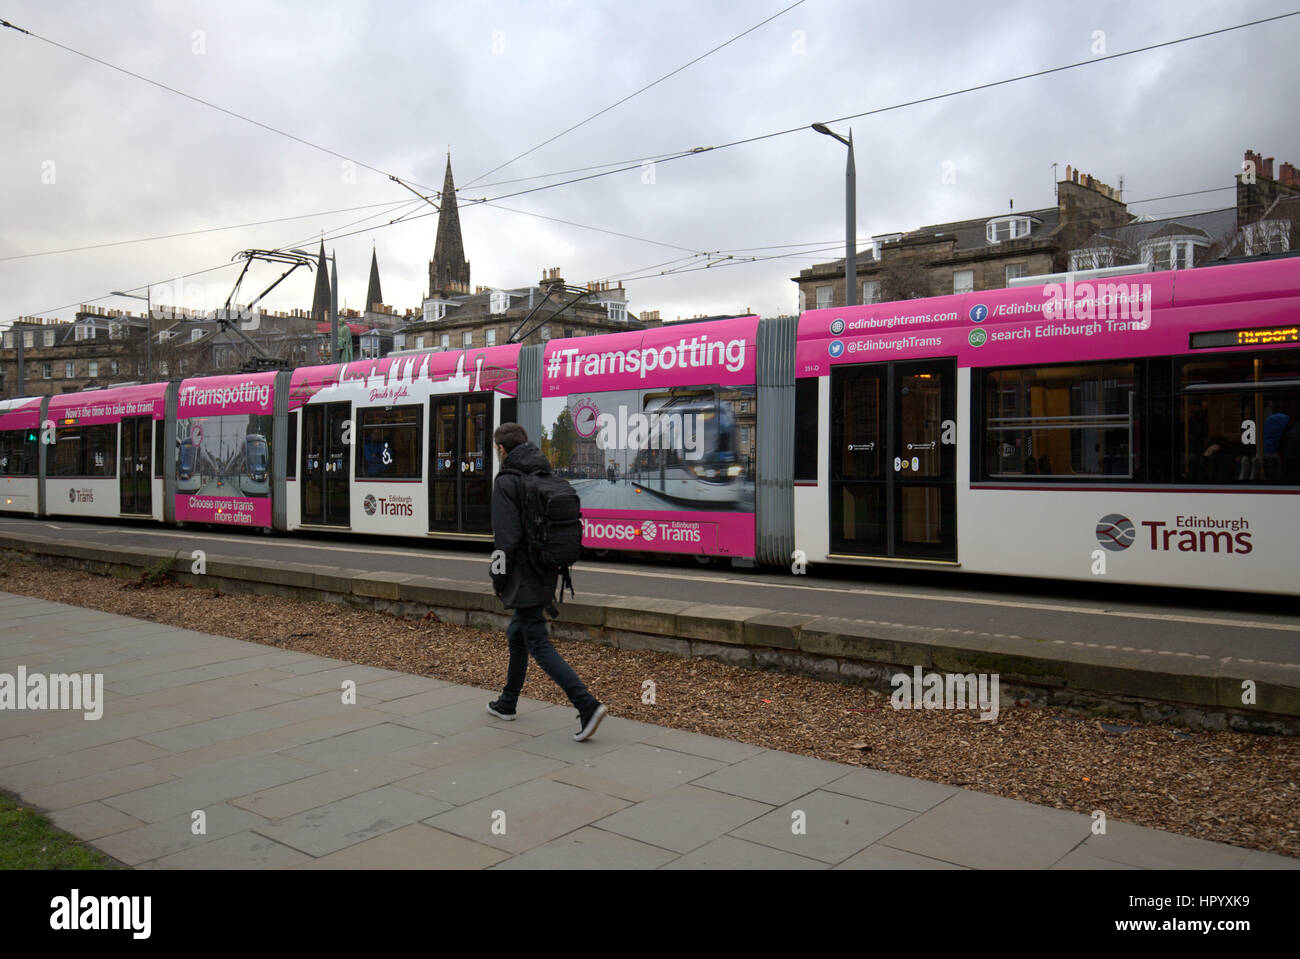 Tranvía Tranvía de Edimburgo manchado trainspotting anuncio peatonal caminando Foto de stock